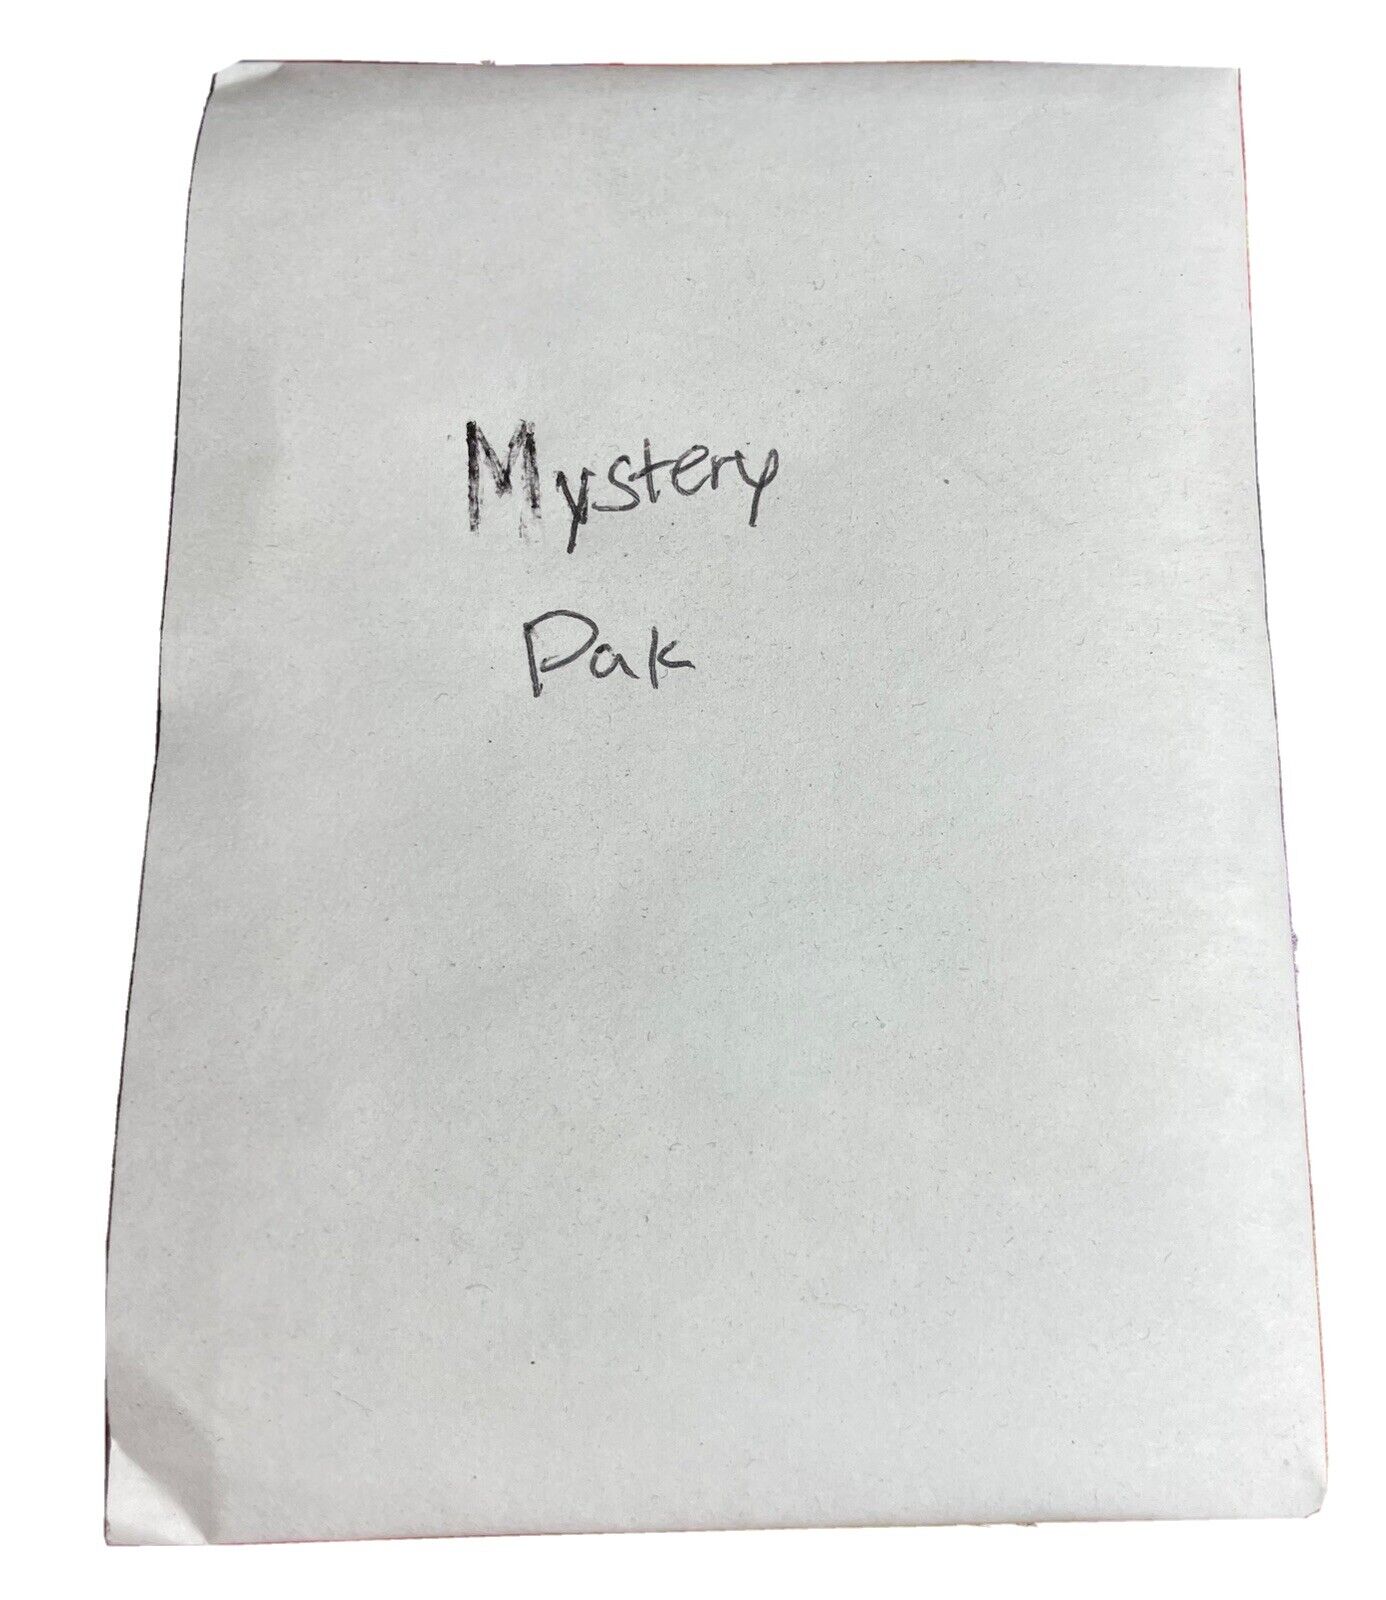 Pokemon mystery pack